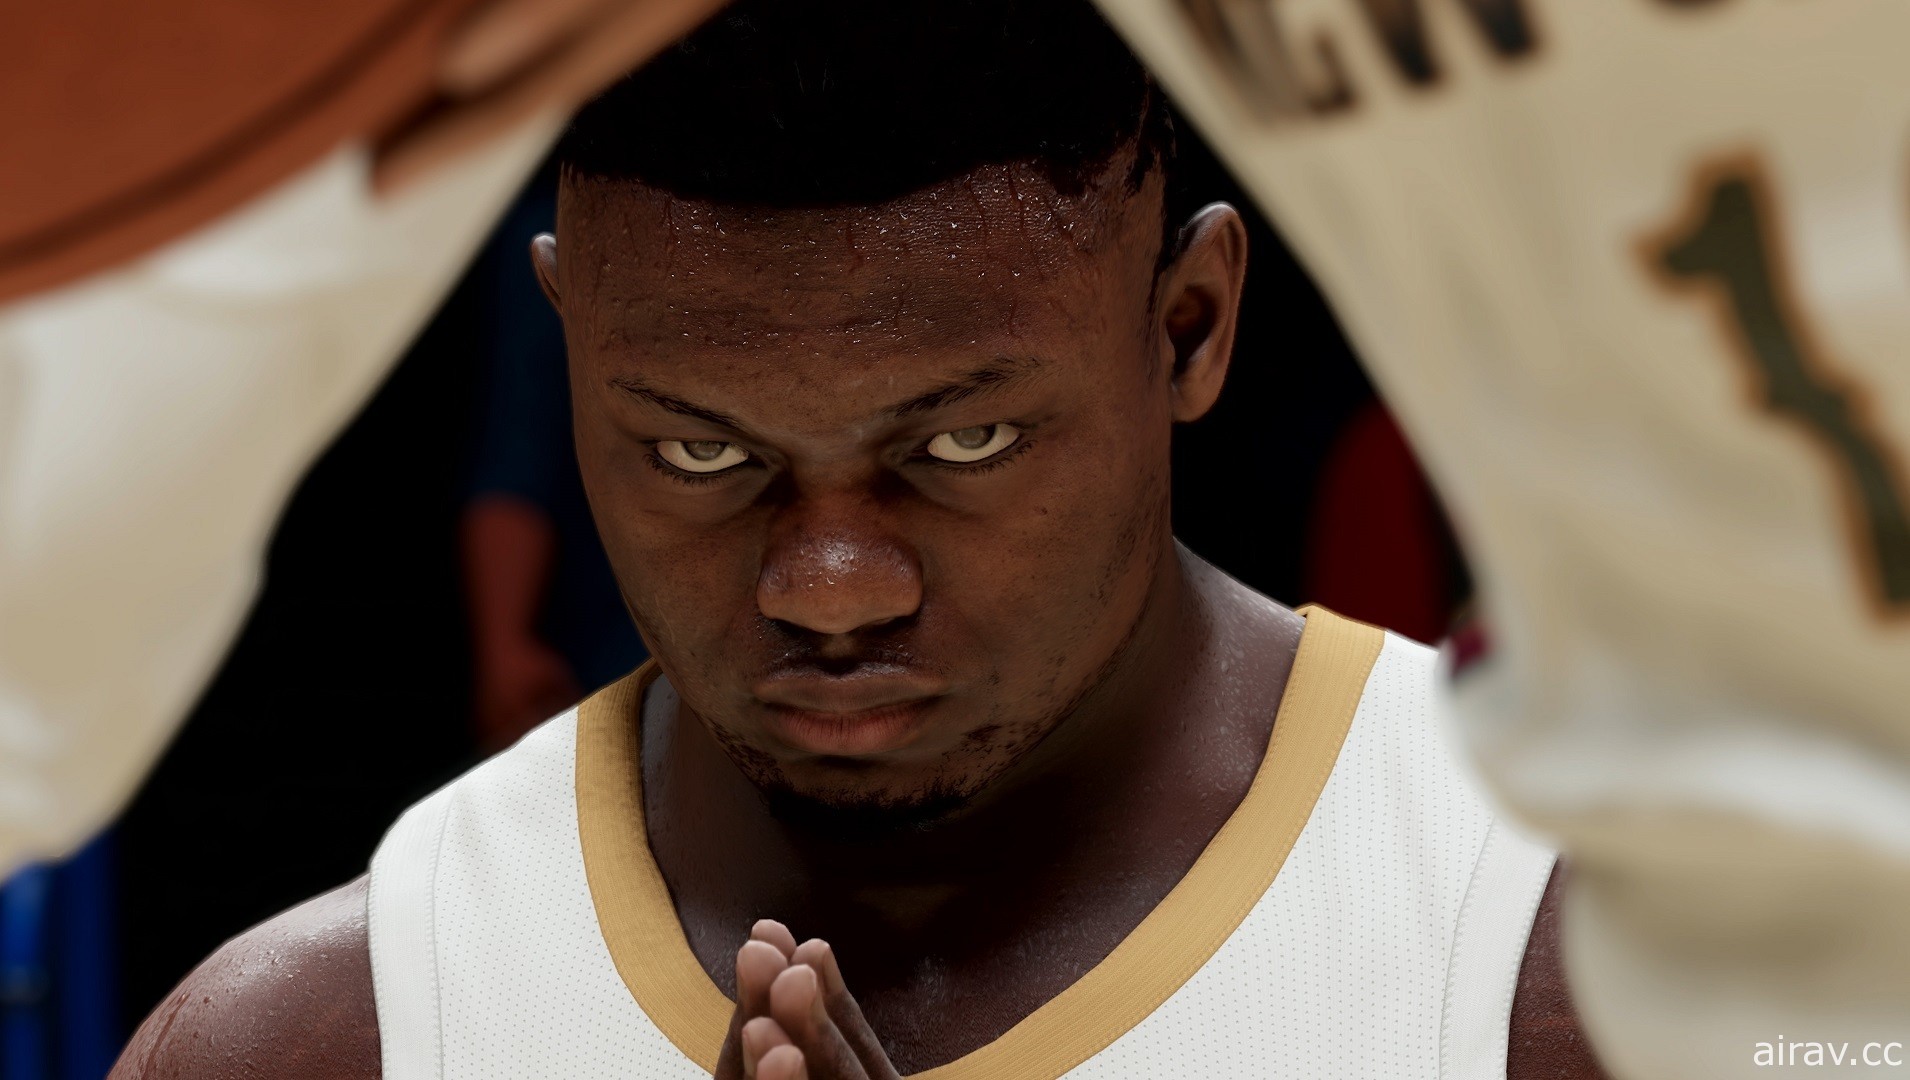 《NBA 2K21》揭露 PS5 版遊戲畫面 展現次世代主機先進繪圖效果